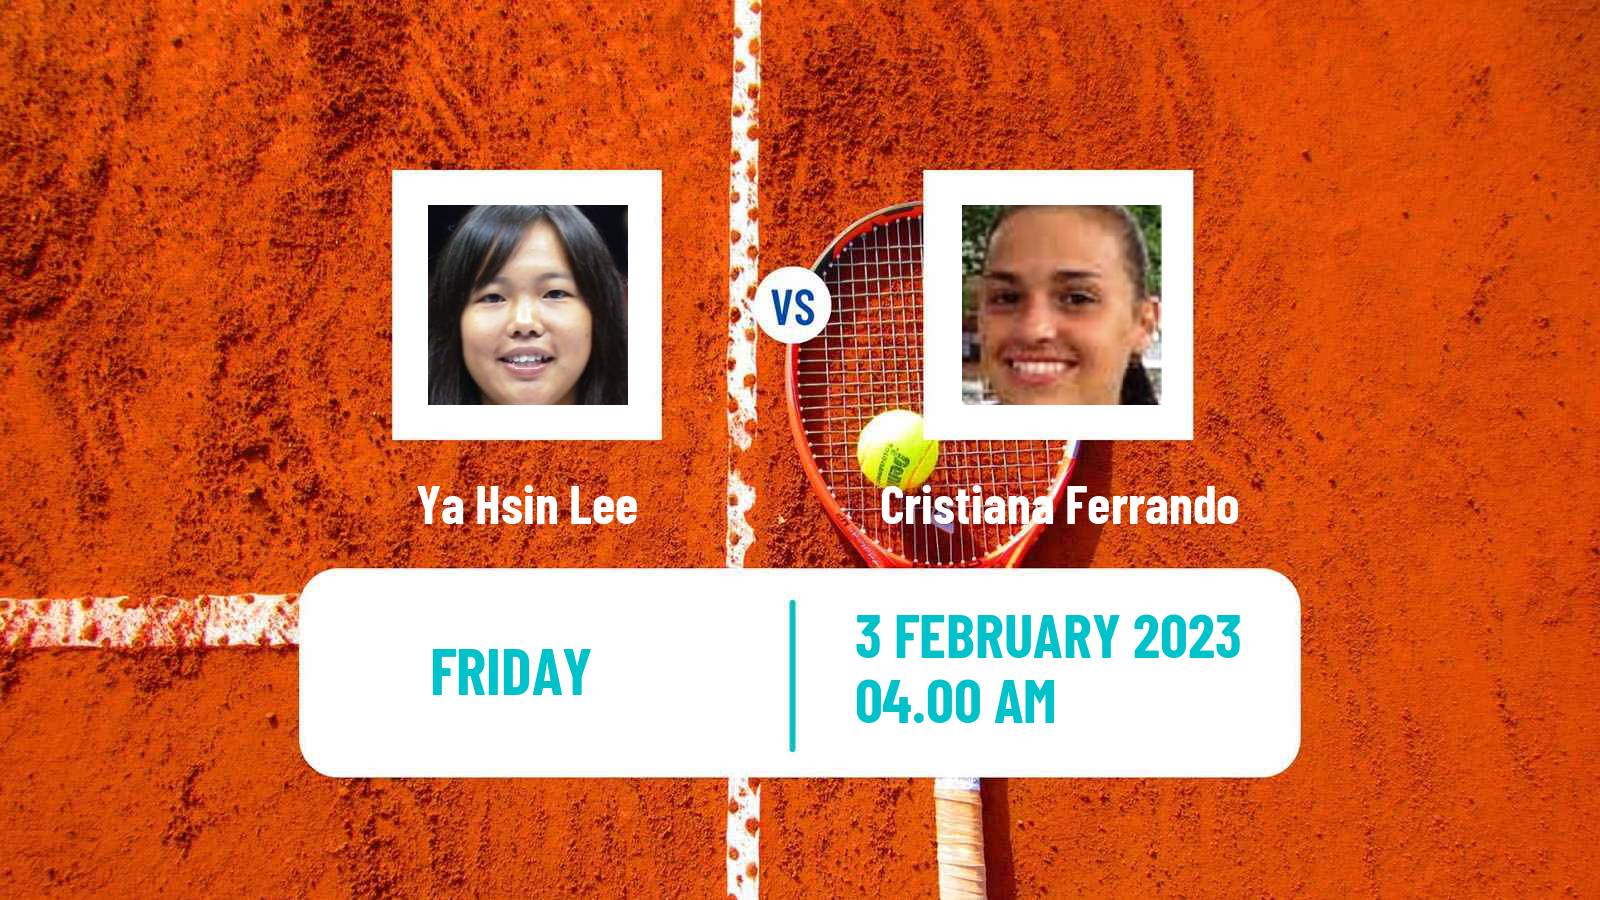 Tennis ITF Tournaments Ya Hsin Lee - Cristiana Ferrando